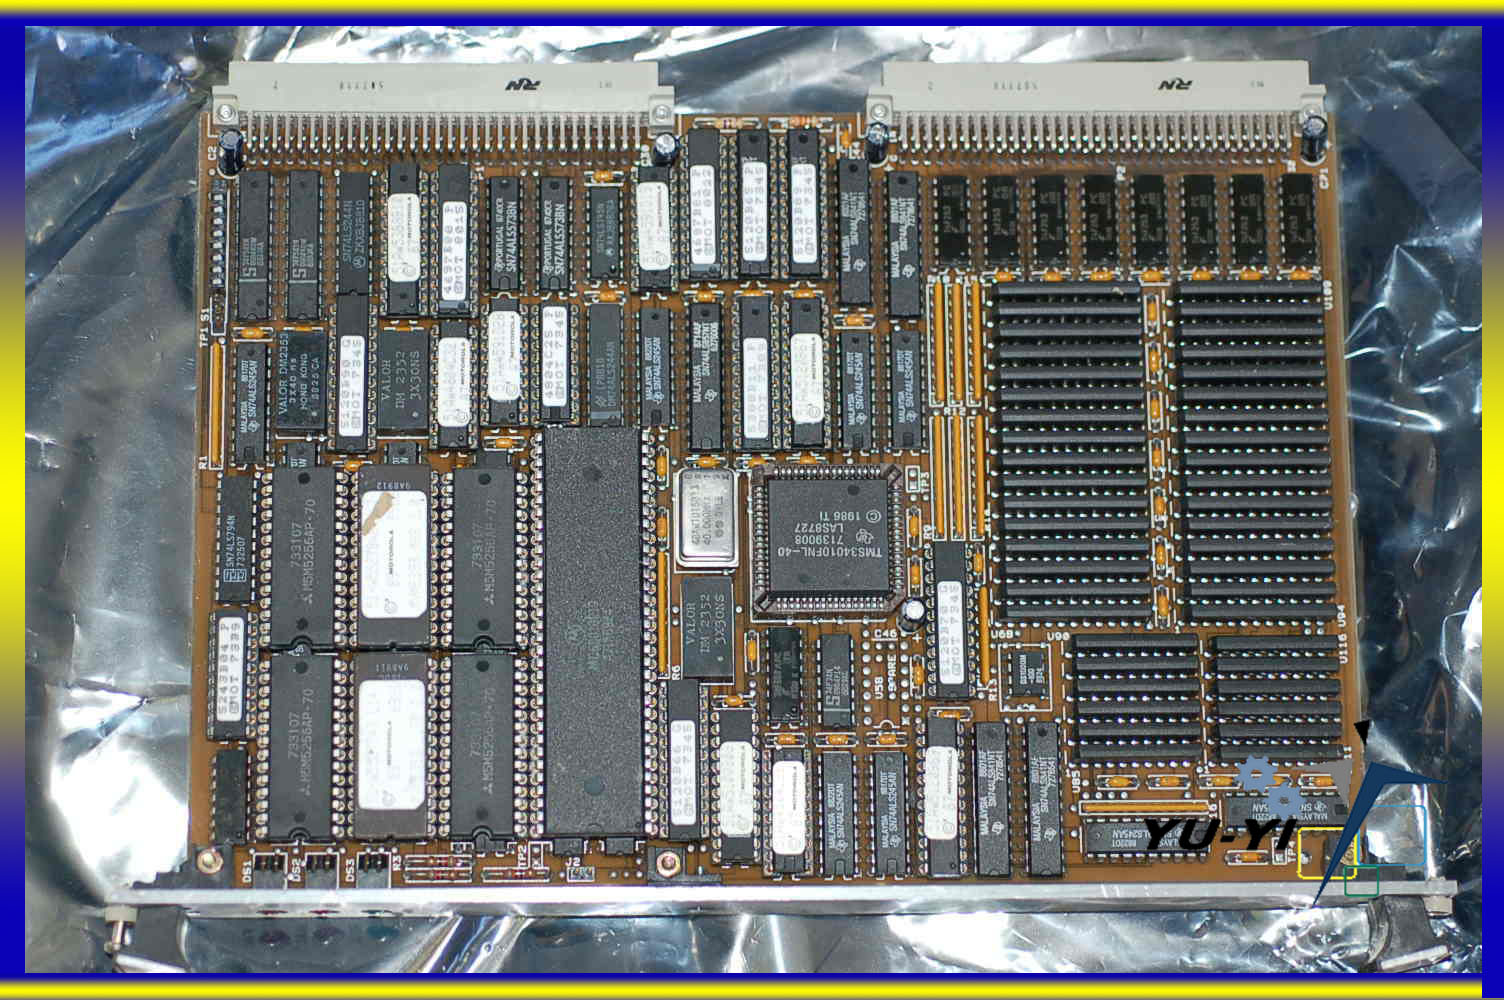 Motorola MVME393 Multichannel VME graphics controller